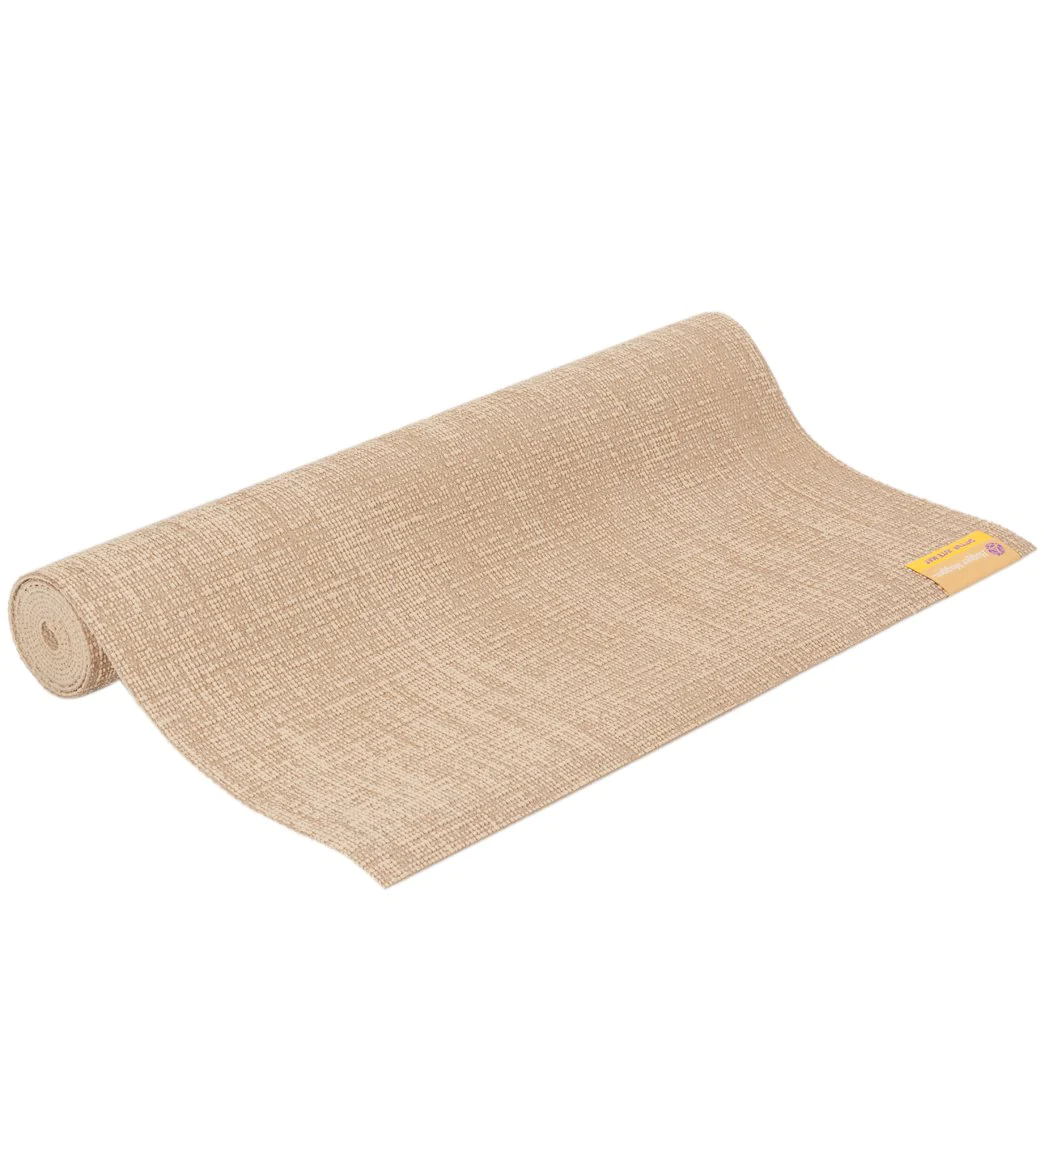 A rolled up tan jute yoga mat from Hugger Mugger